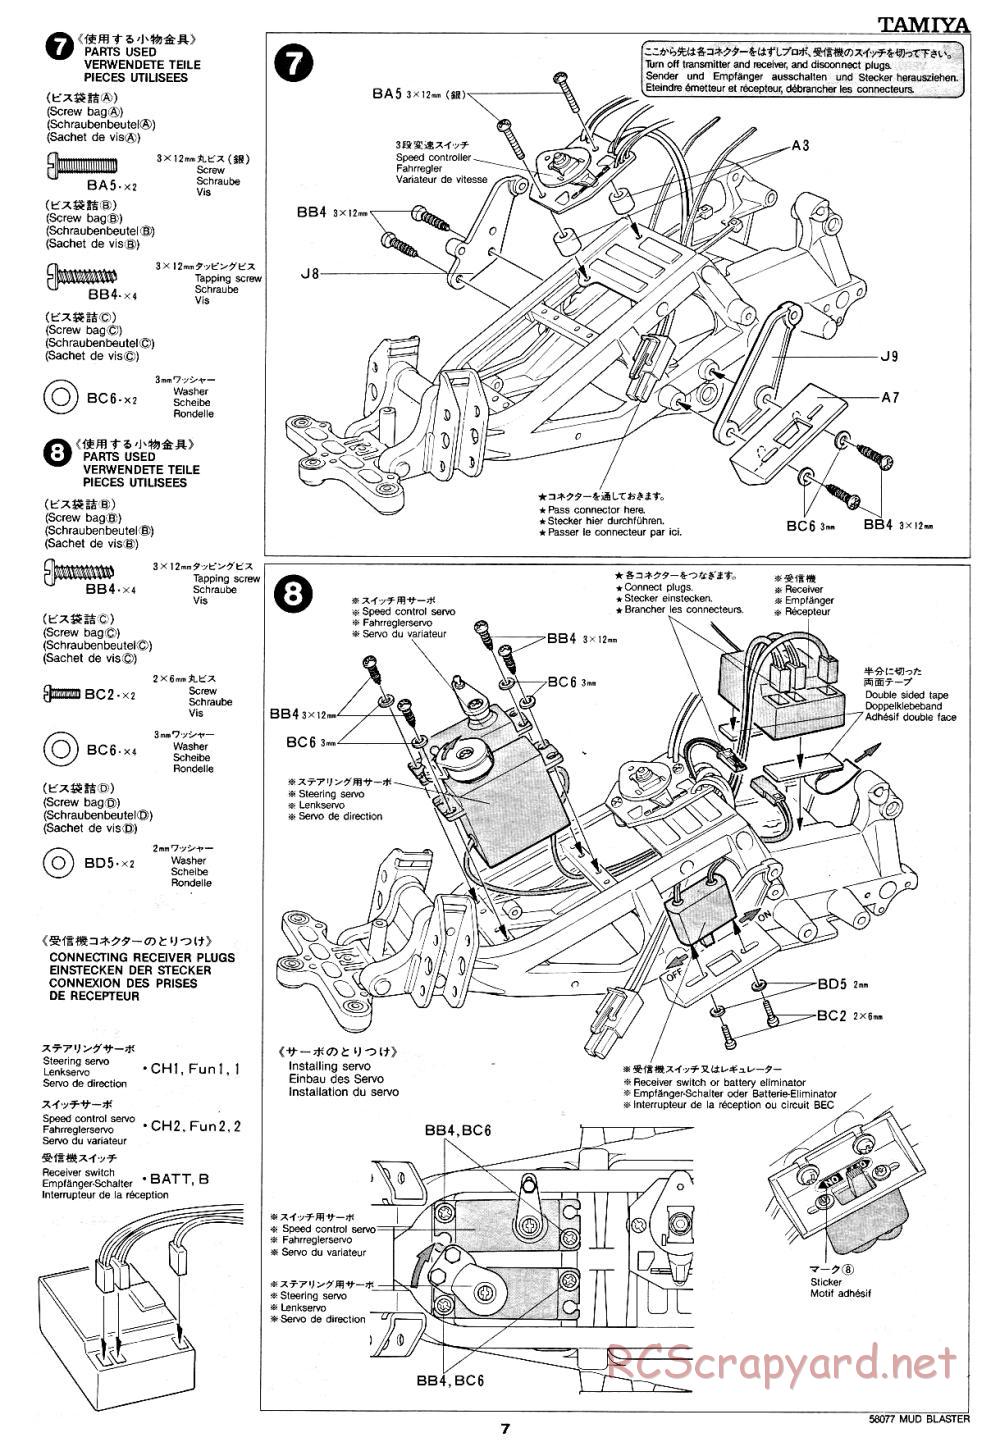 Tamiya - Mud Blaster - 58077 - Manual - Page 7